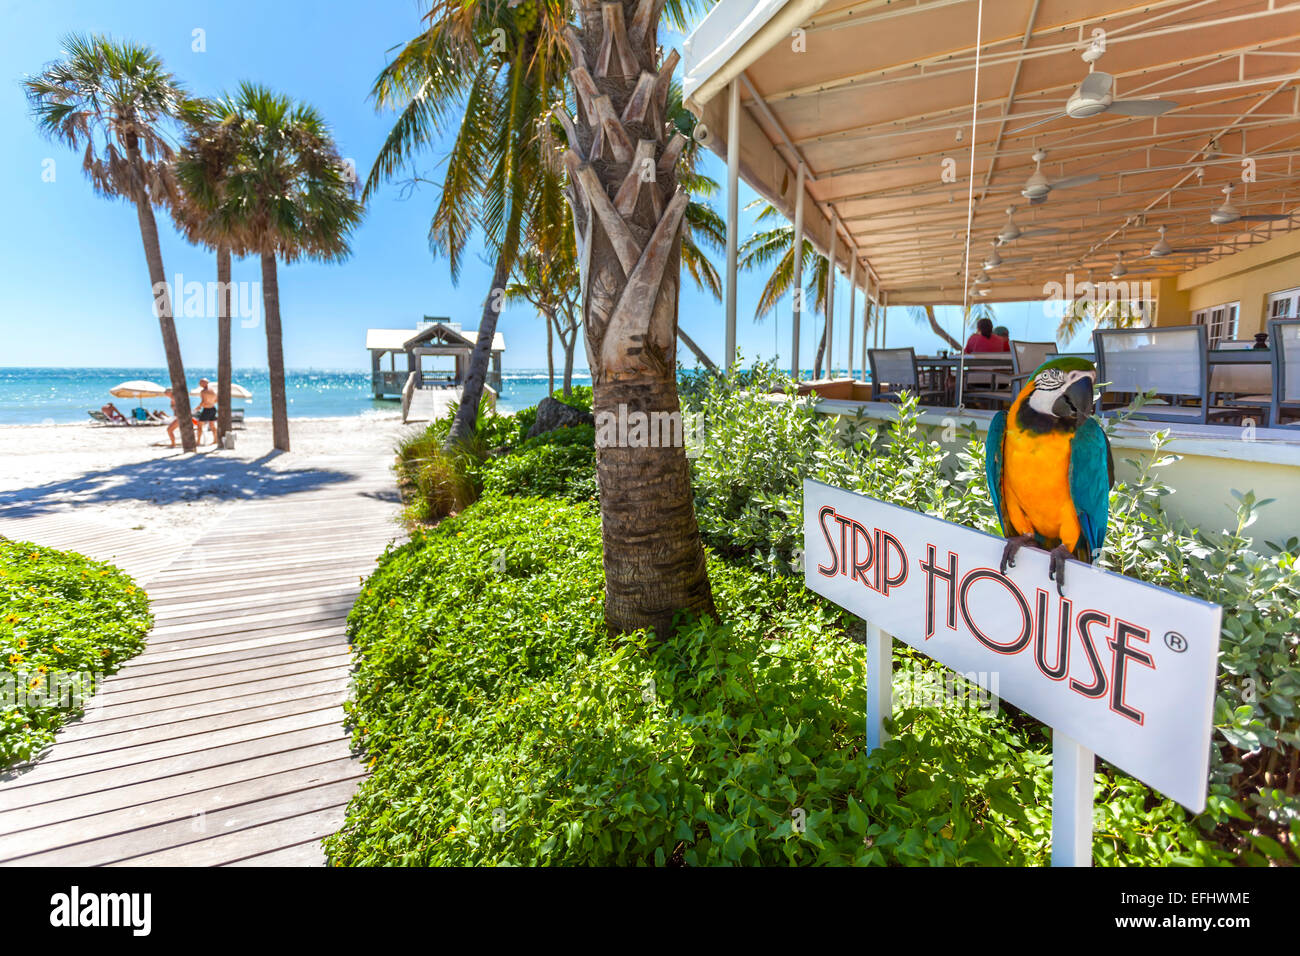 Impression at Gourmet Restaurant The Strip House, Reach Resort, Key West, Florida Keys, USA Stock Photo